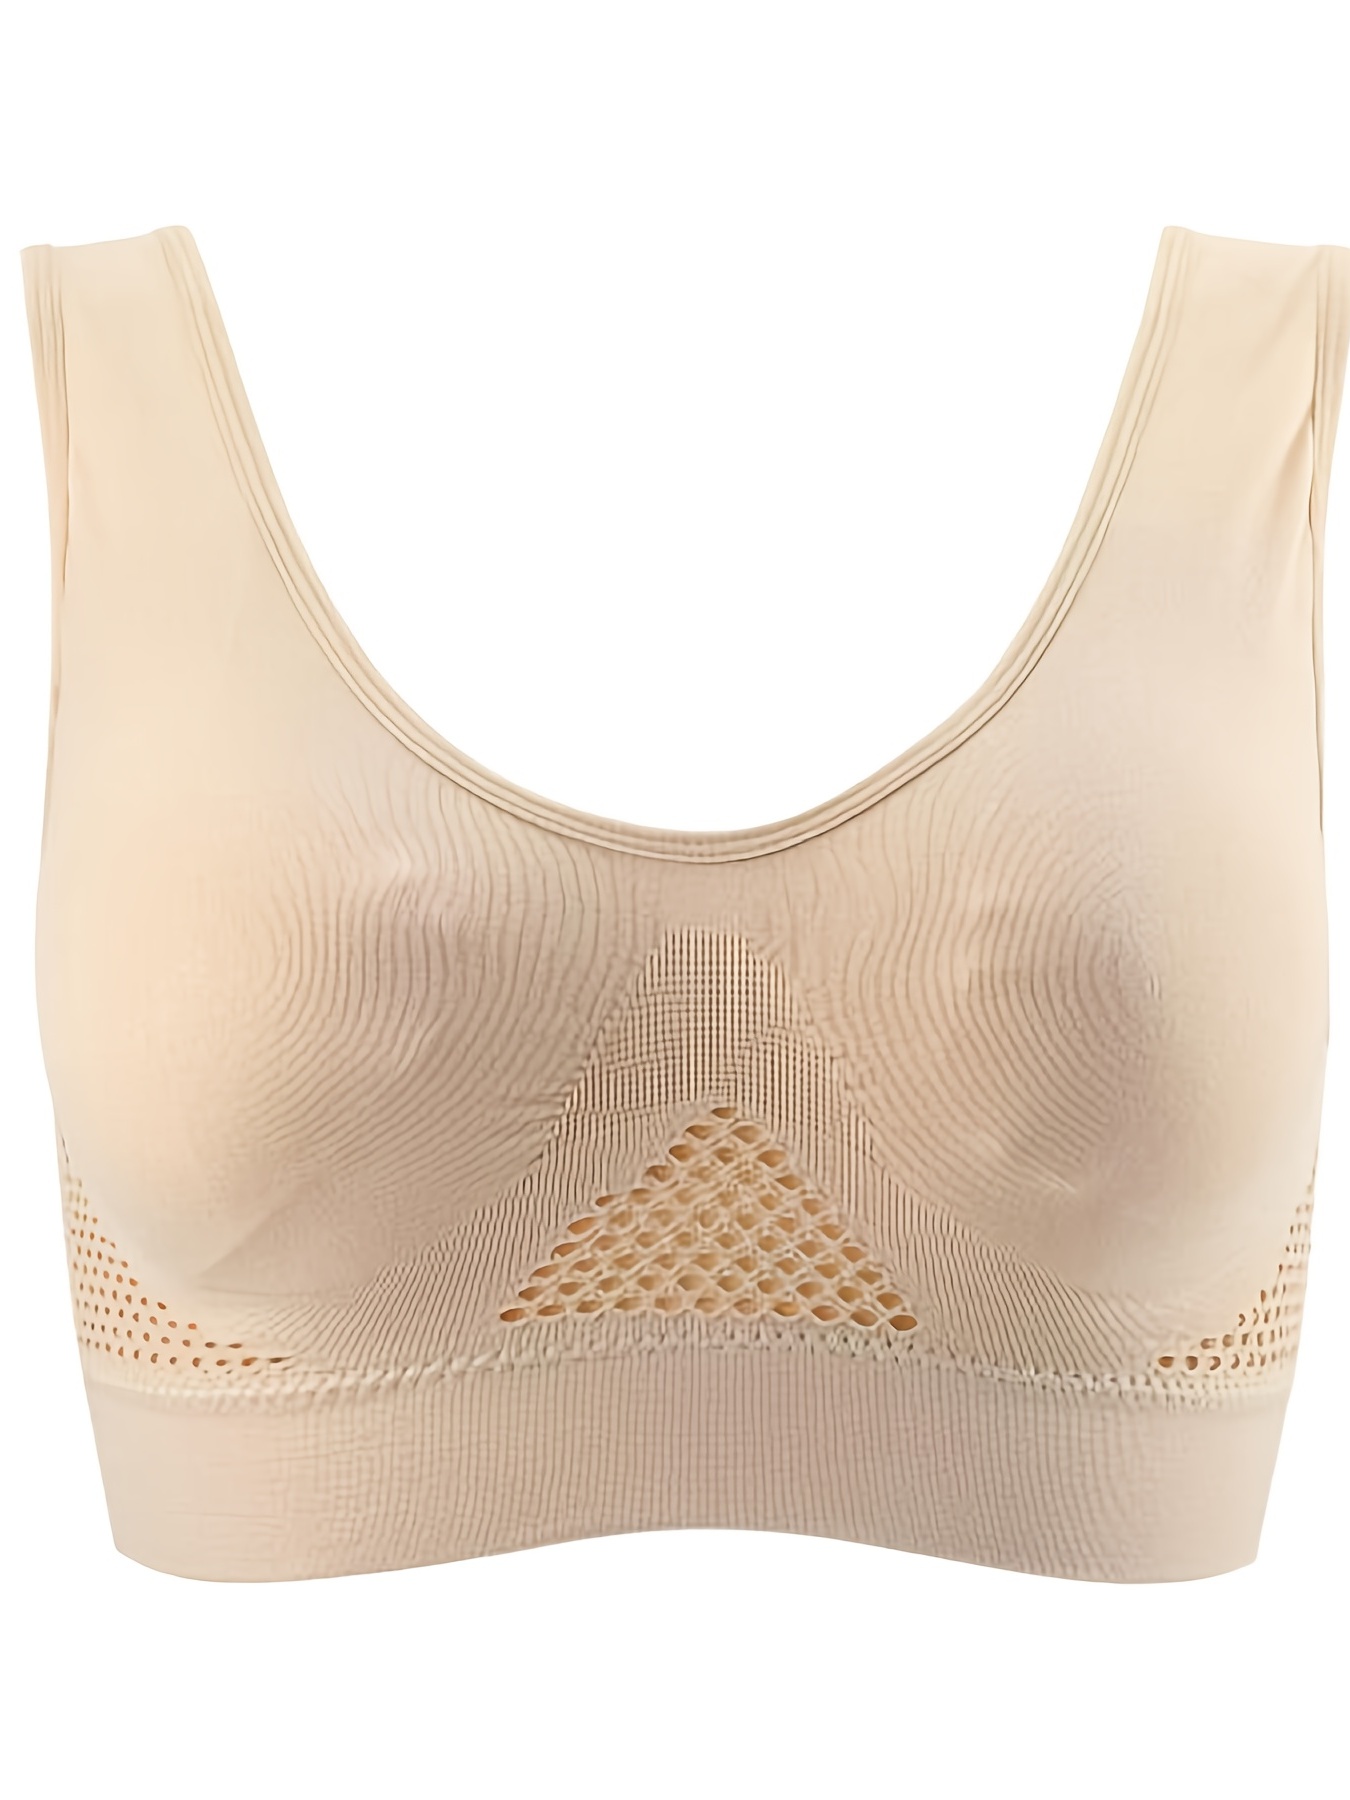 Sports Cross Back Wrap Breast Wireless Women Tube Top Seamless Bra Set -  China Underwear and Comfort Underwear price